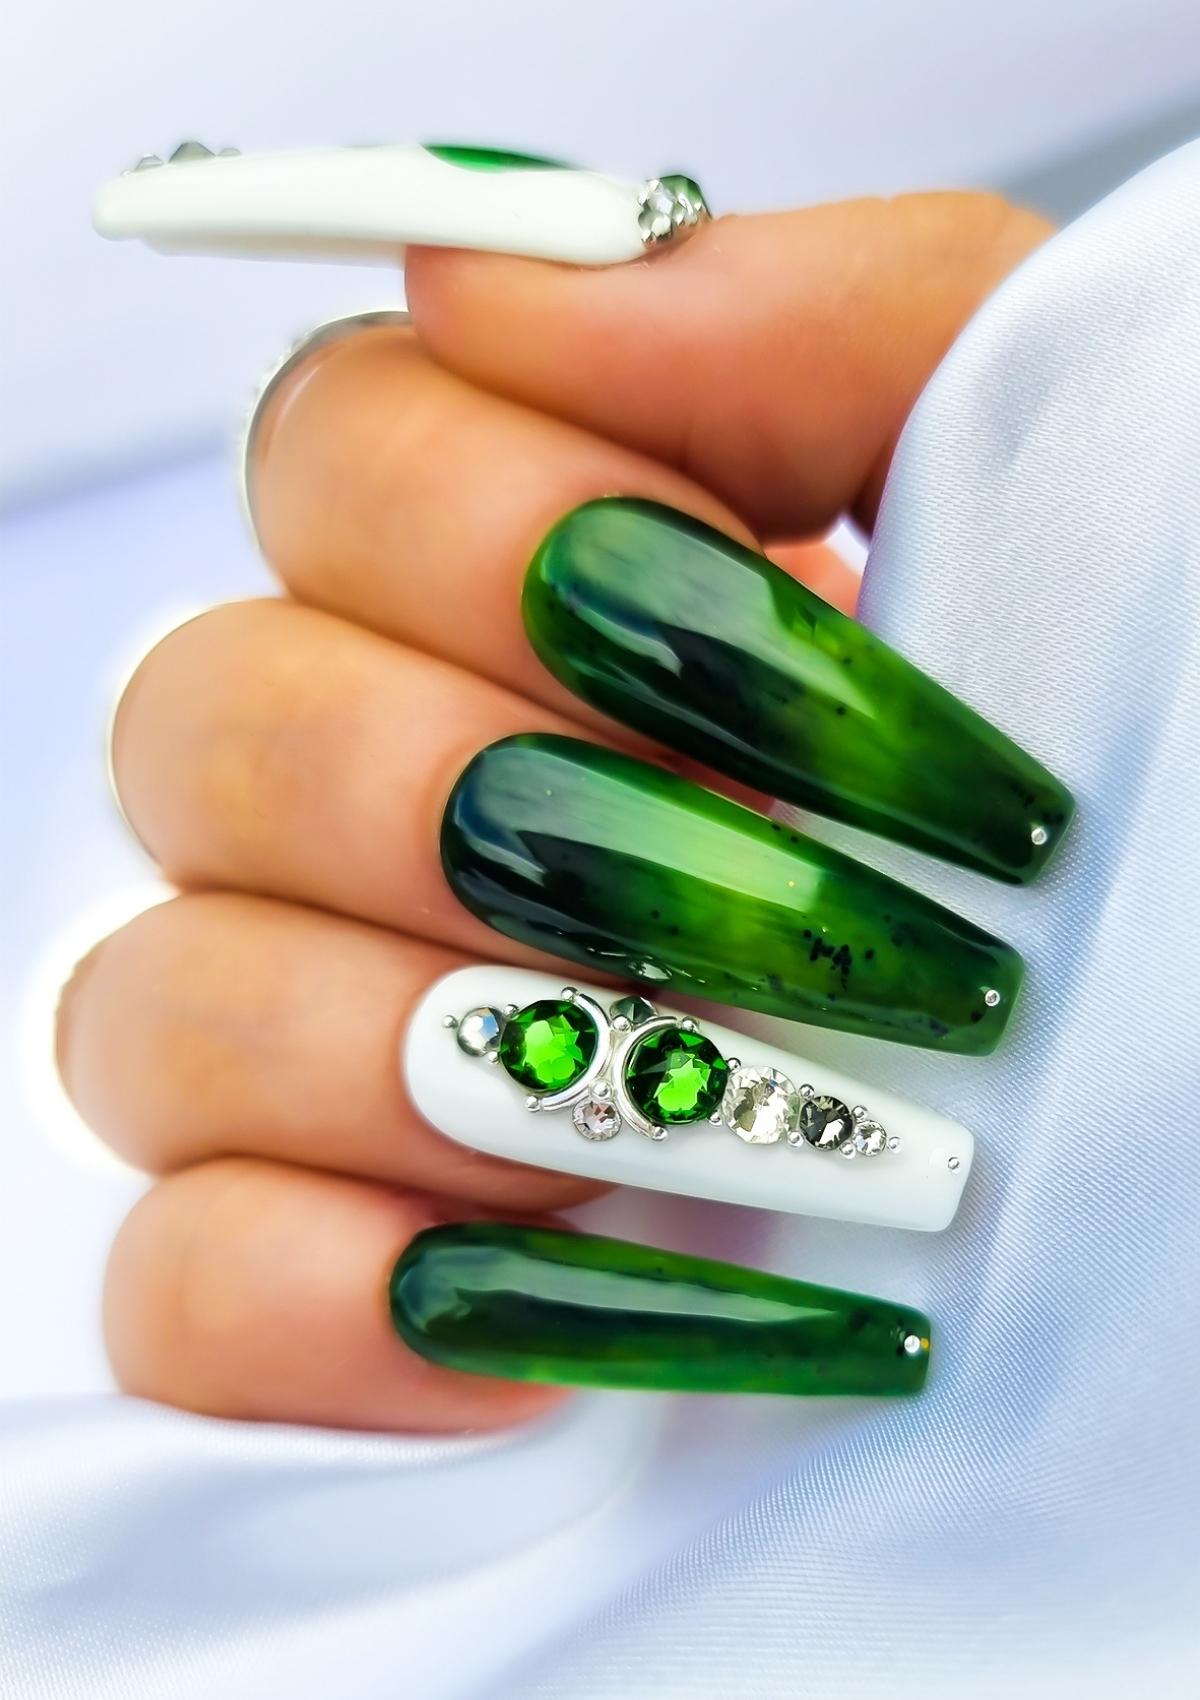 White and pounamu greenstone nails with matching Swarovski crystals  